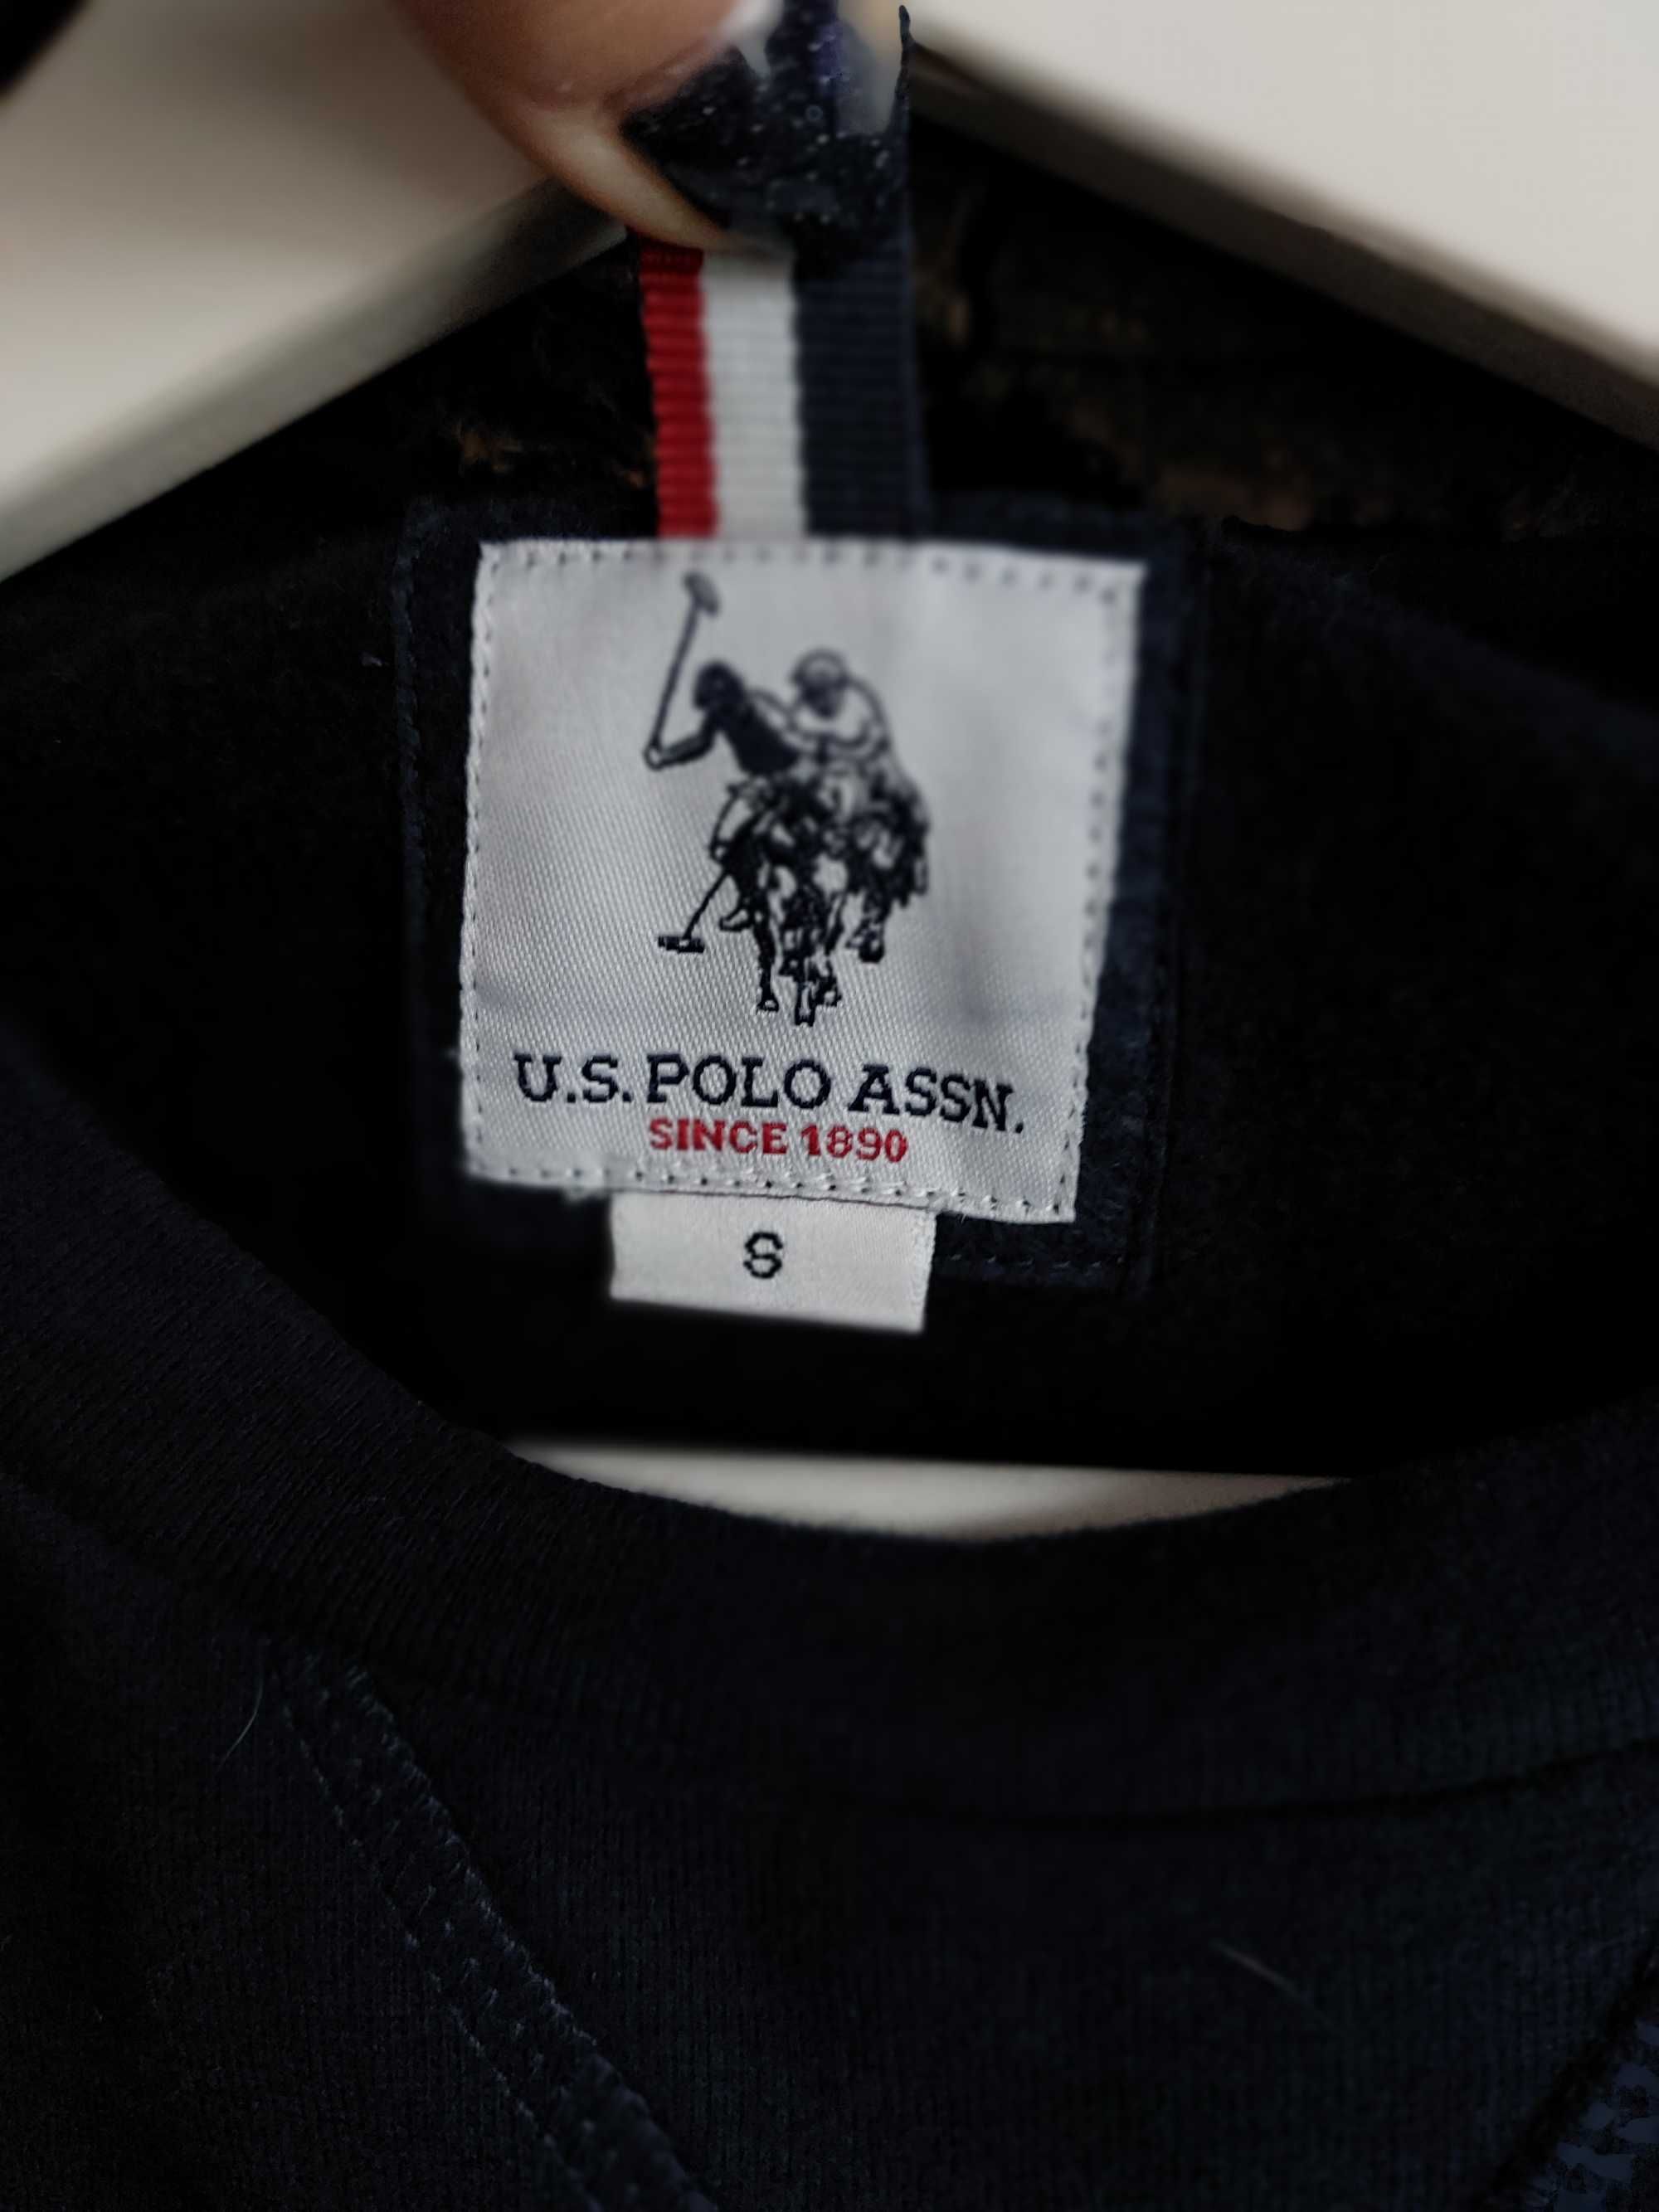 Bluza męska U.S Polo Assn. Rozmiar S